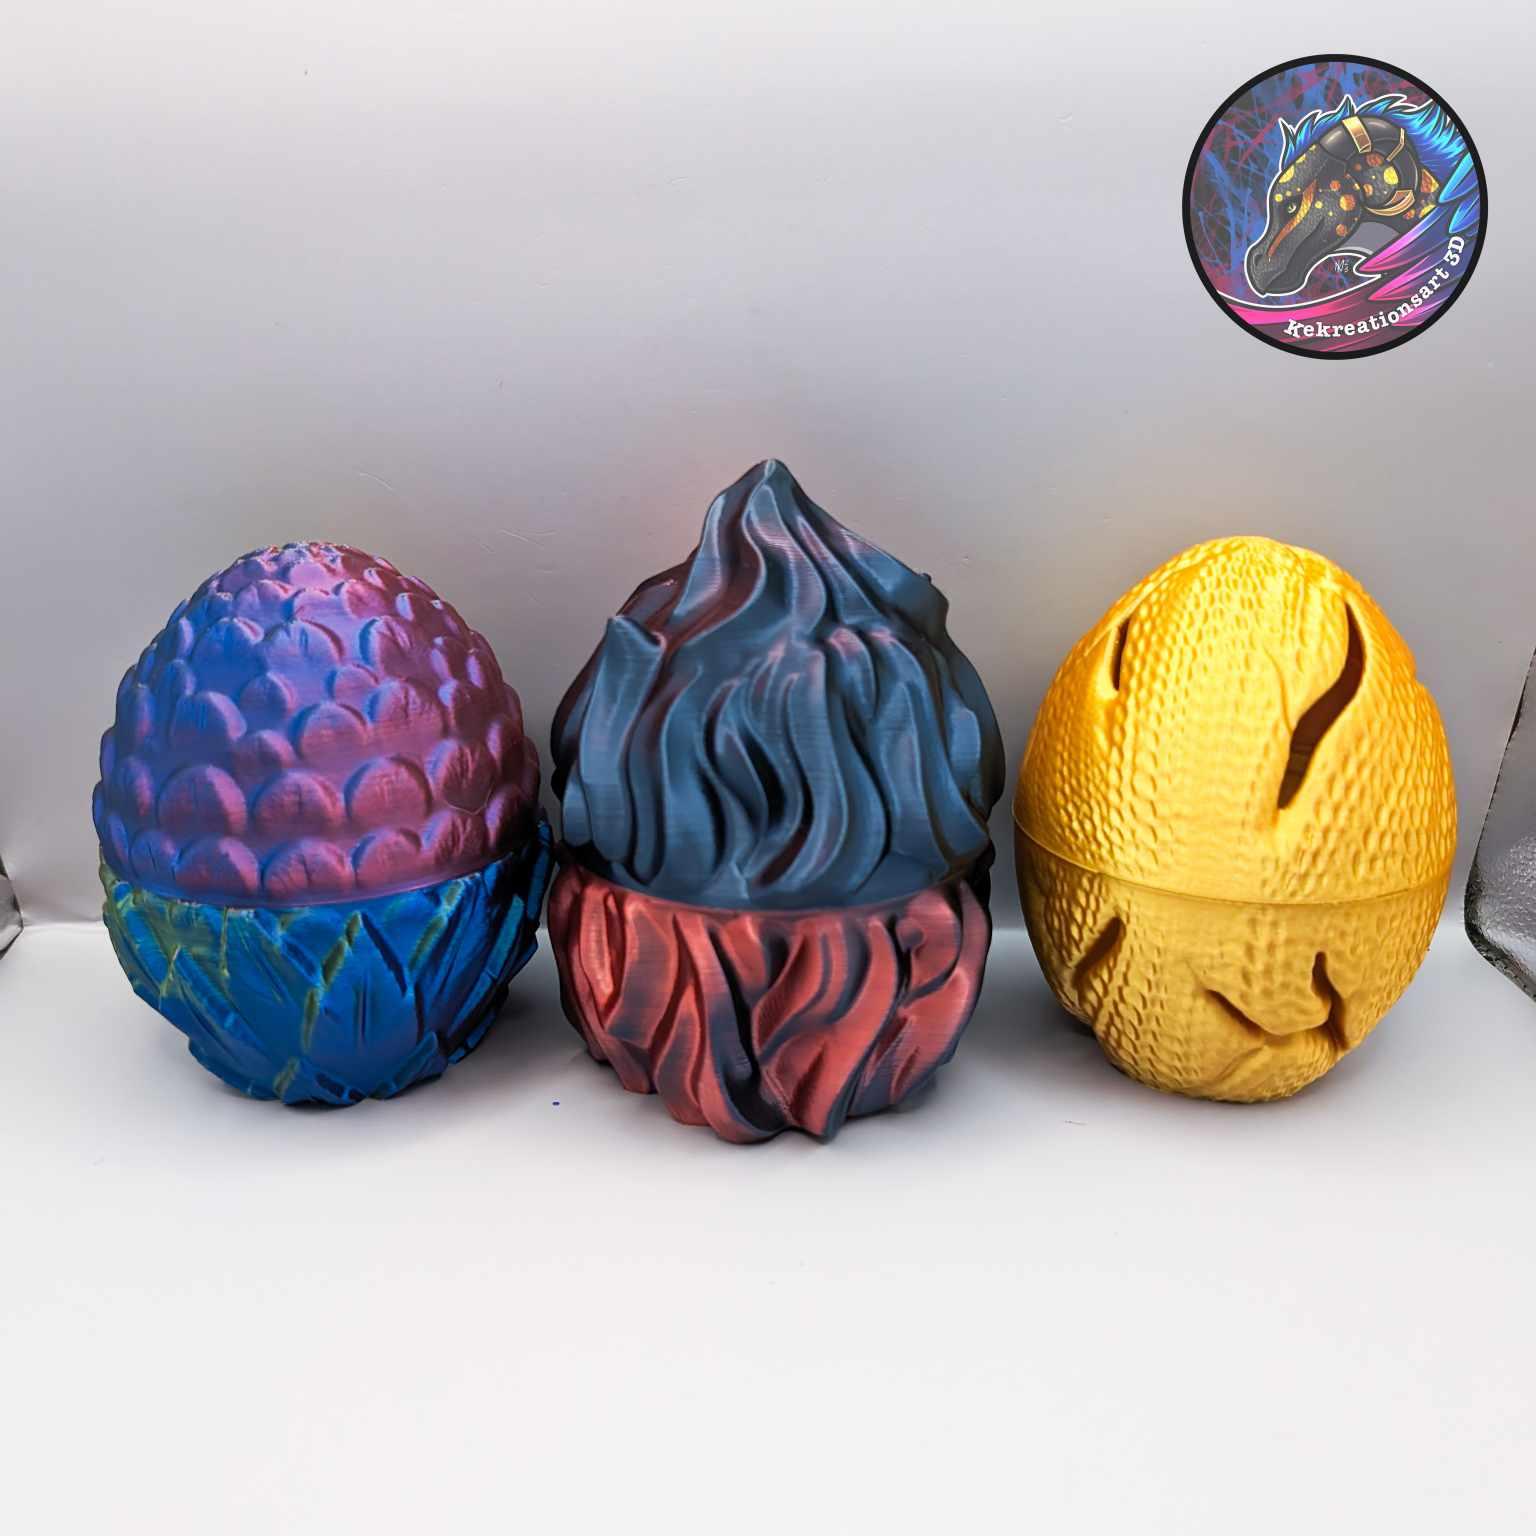 BOUTIQUE + FLEXI Feather Egg, Fire Egg, & Cracked Dragon Egg EARLY ACCESS